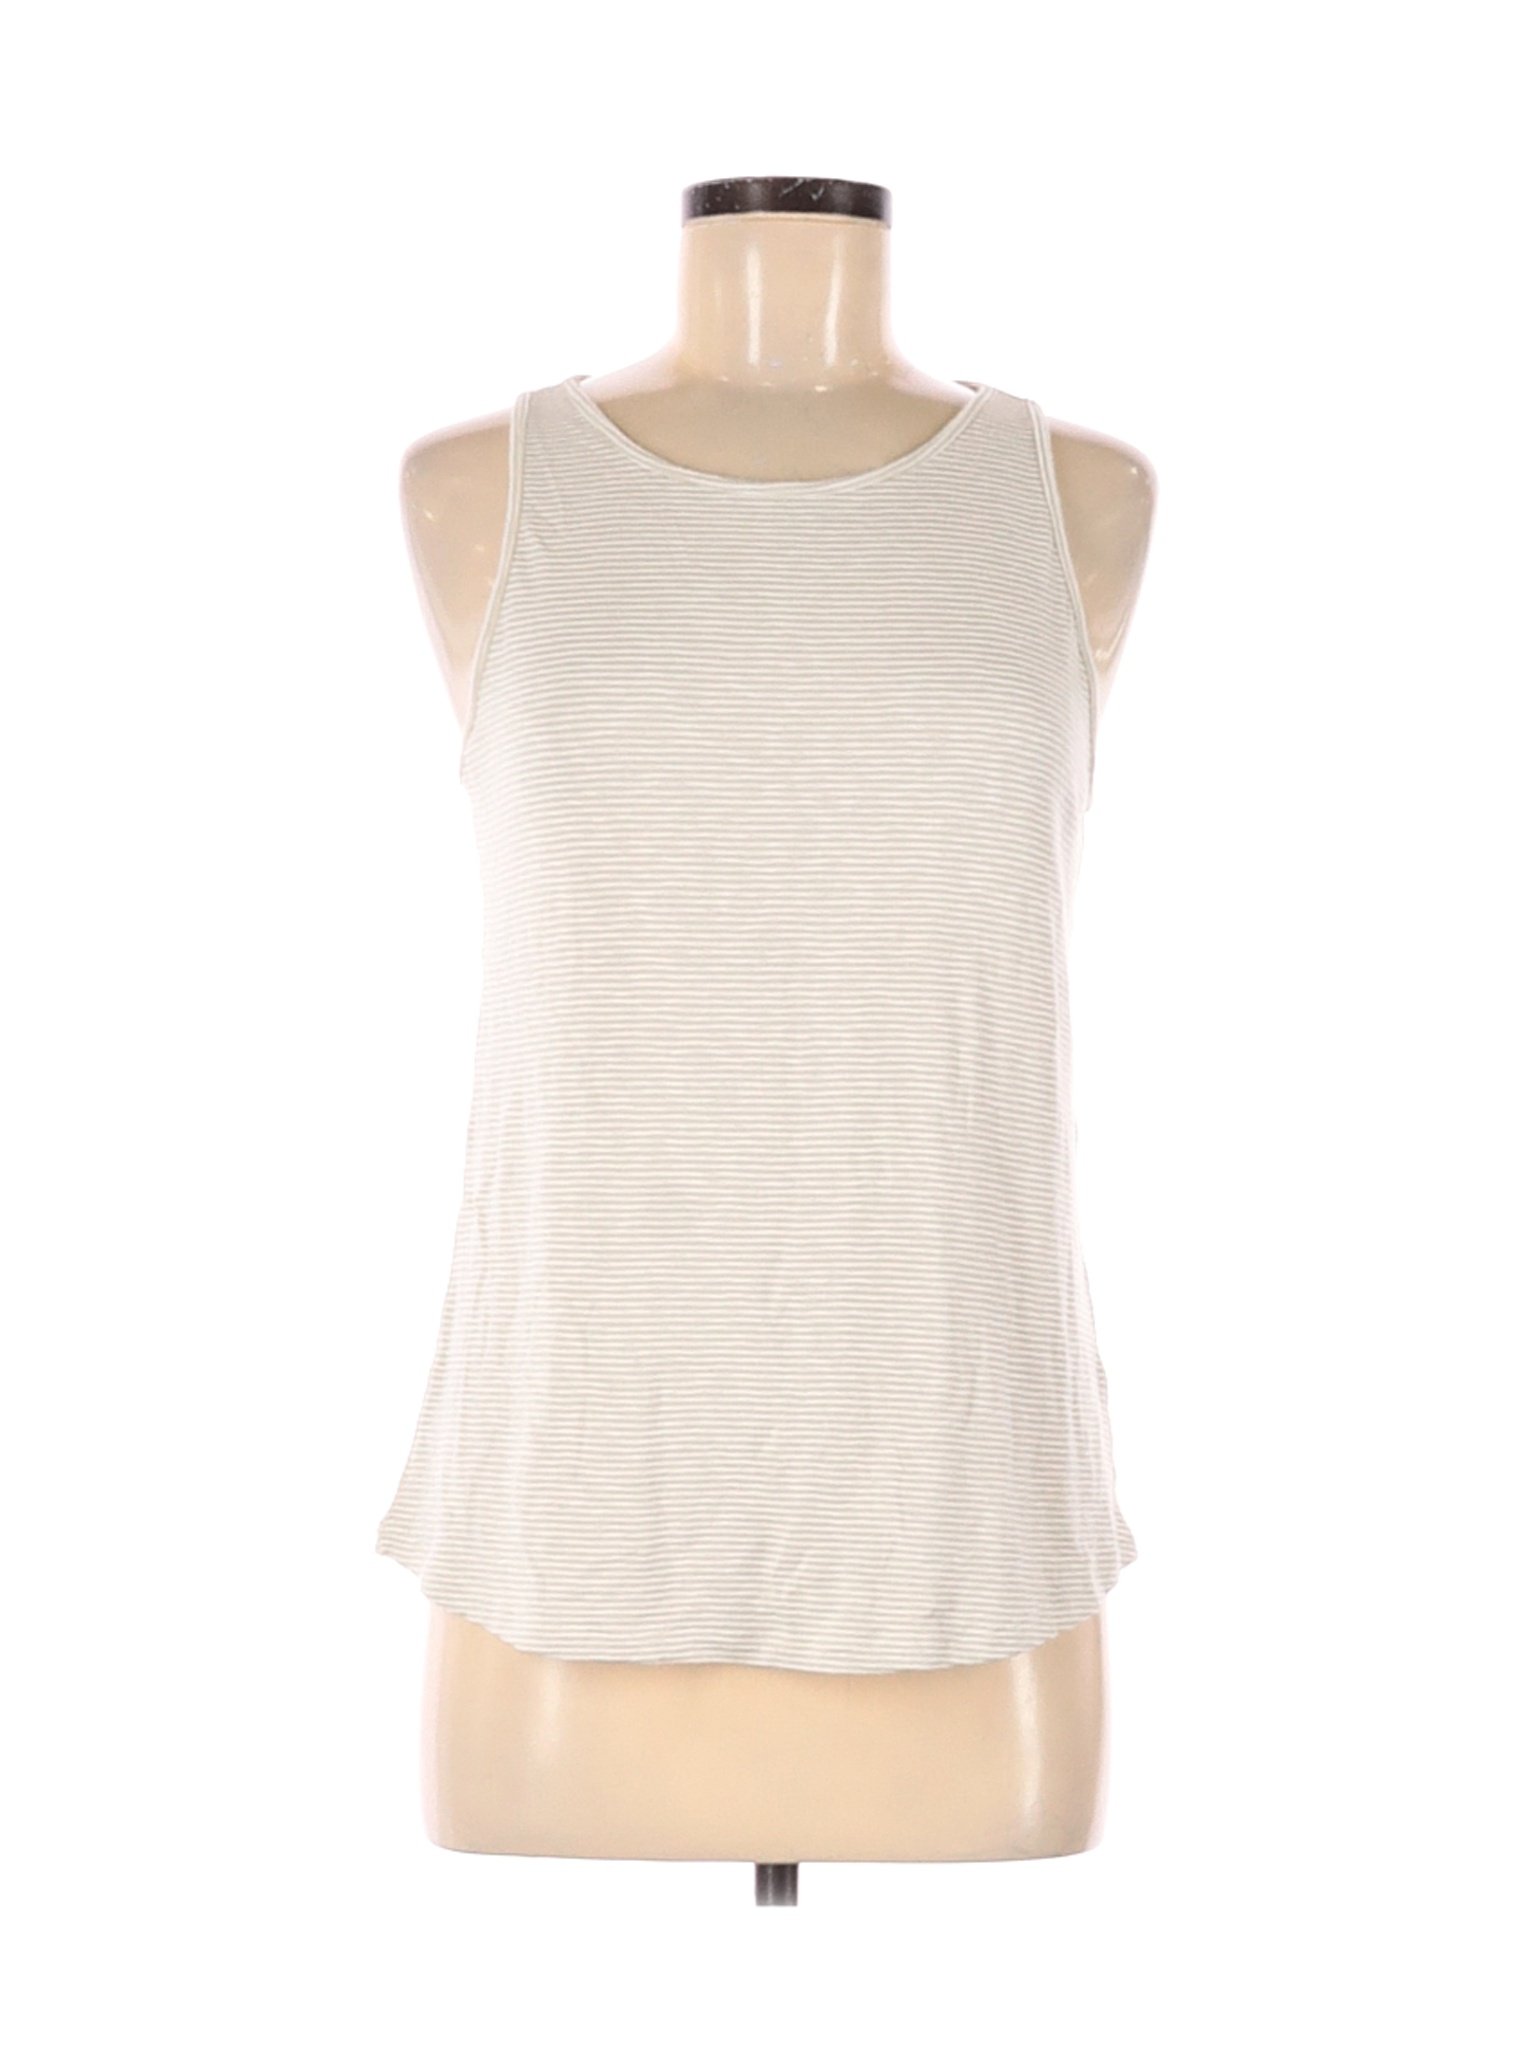 Old Navy Women Ivory Sleeveless T-Shirt M | eBay